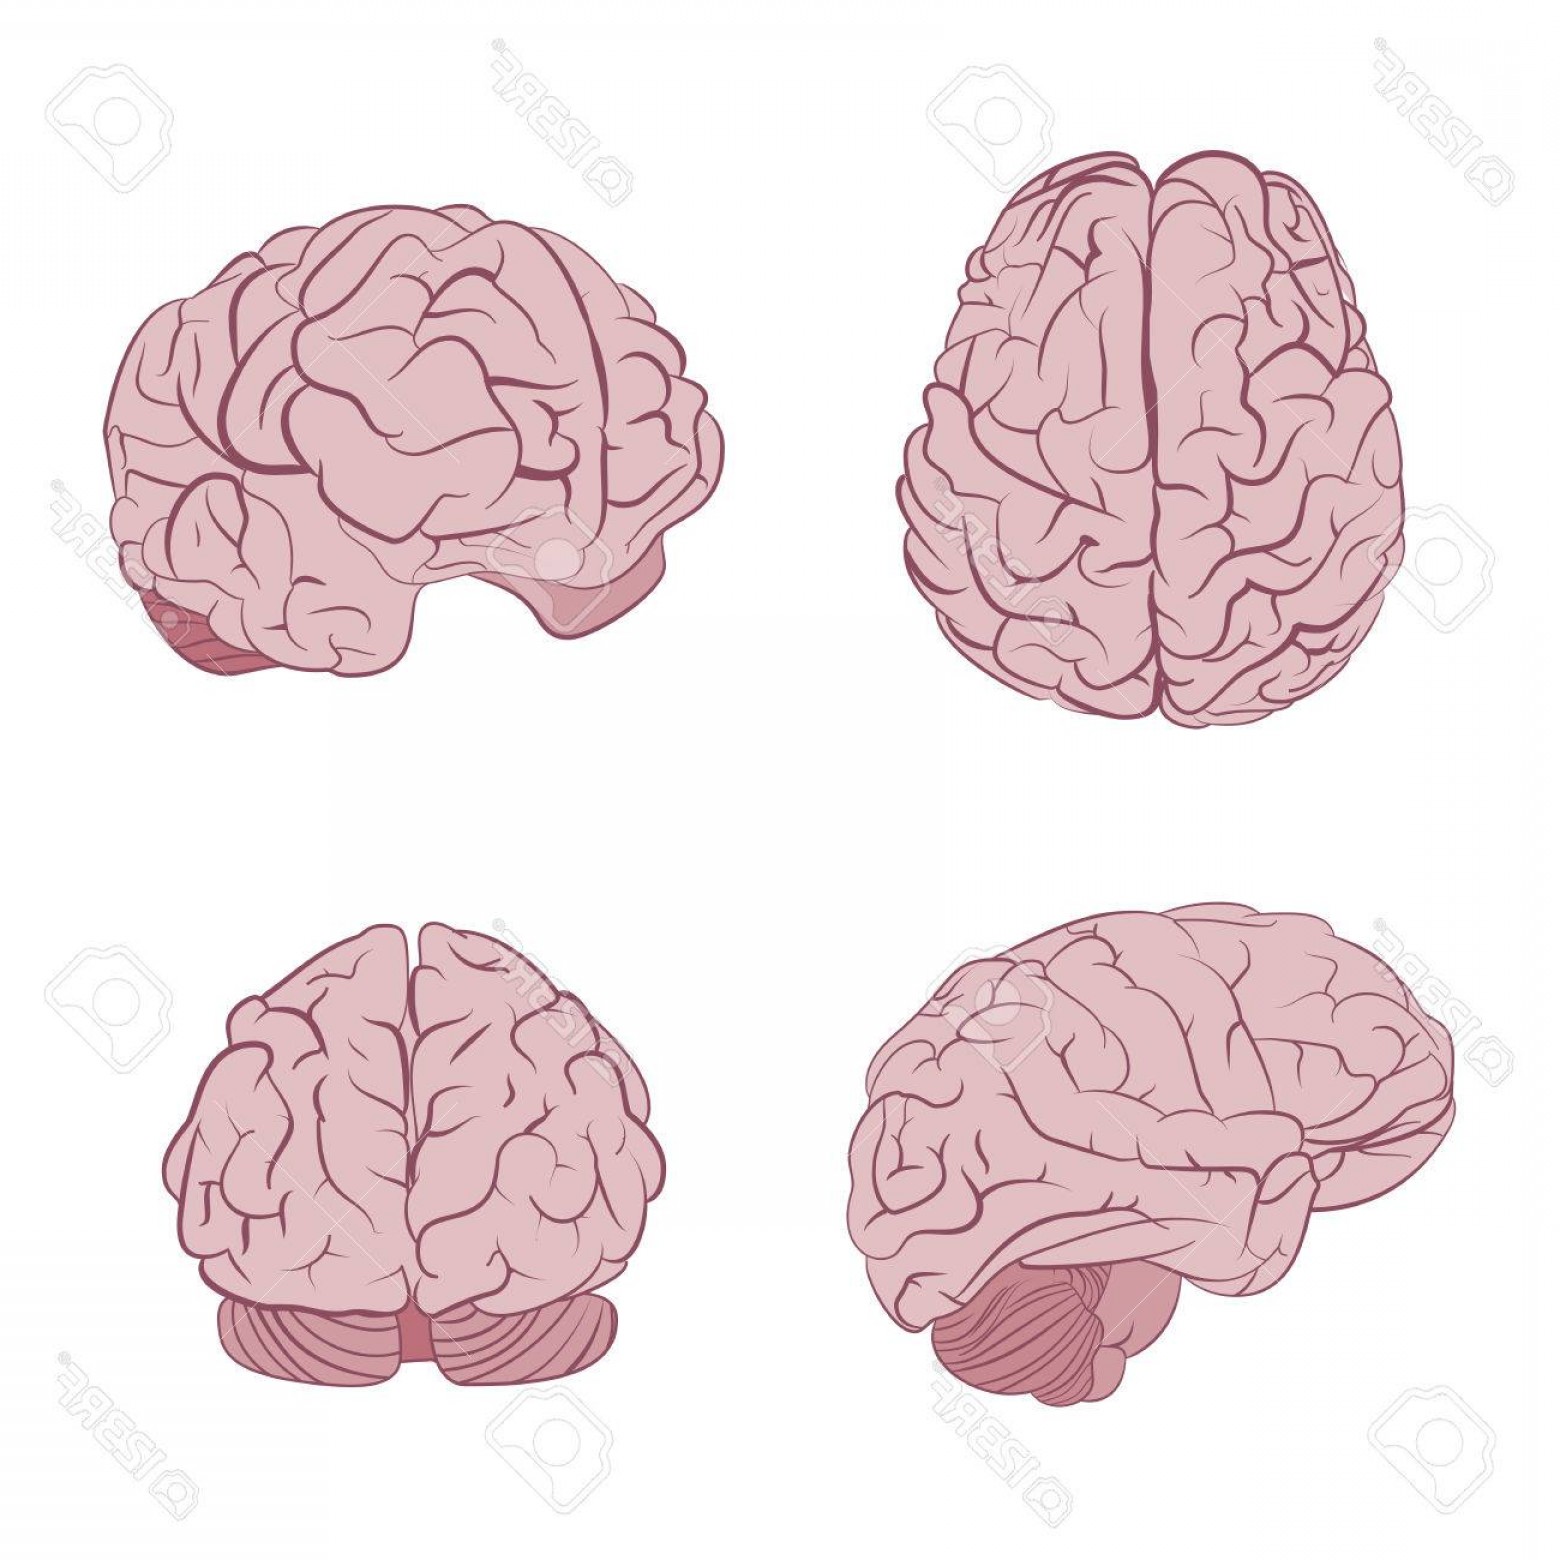 Photostock Vector Human Brain Four Views Top Frontal Side